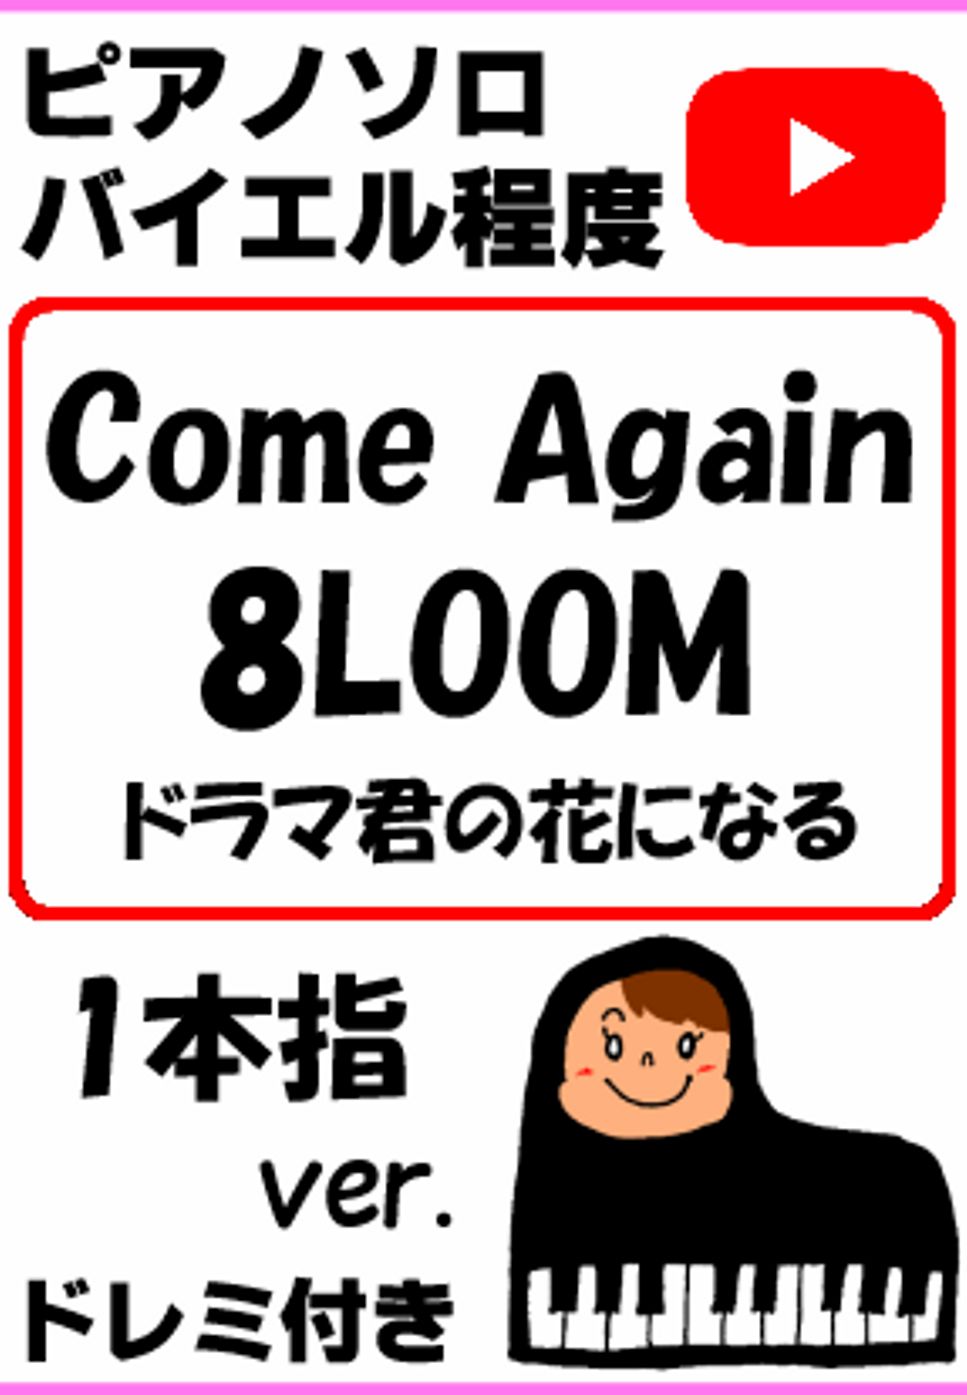 IE-MON - ｢Come Again」8LOOM TBS系火曜ドラマ『君の花になる』一本指ver. (親子連弾/連弾/簡単ピアノ/白鍵ピアノ/演奏会/ドレミ付/楽譜/鍵盤/piano) by ラボのピアノ